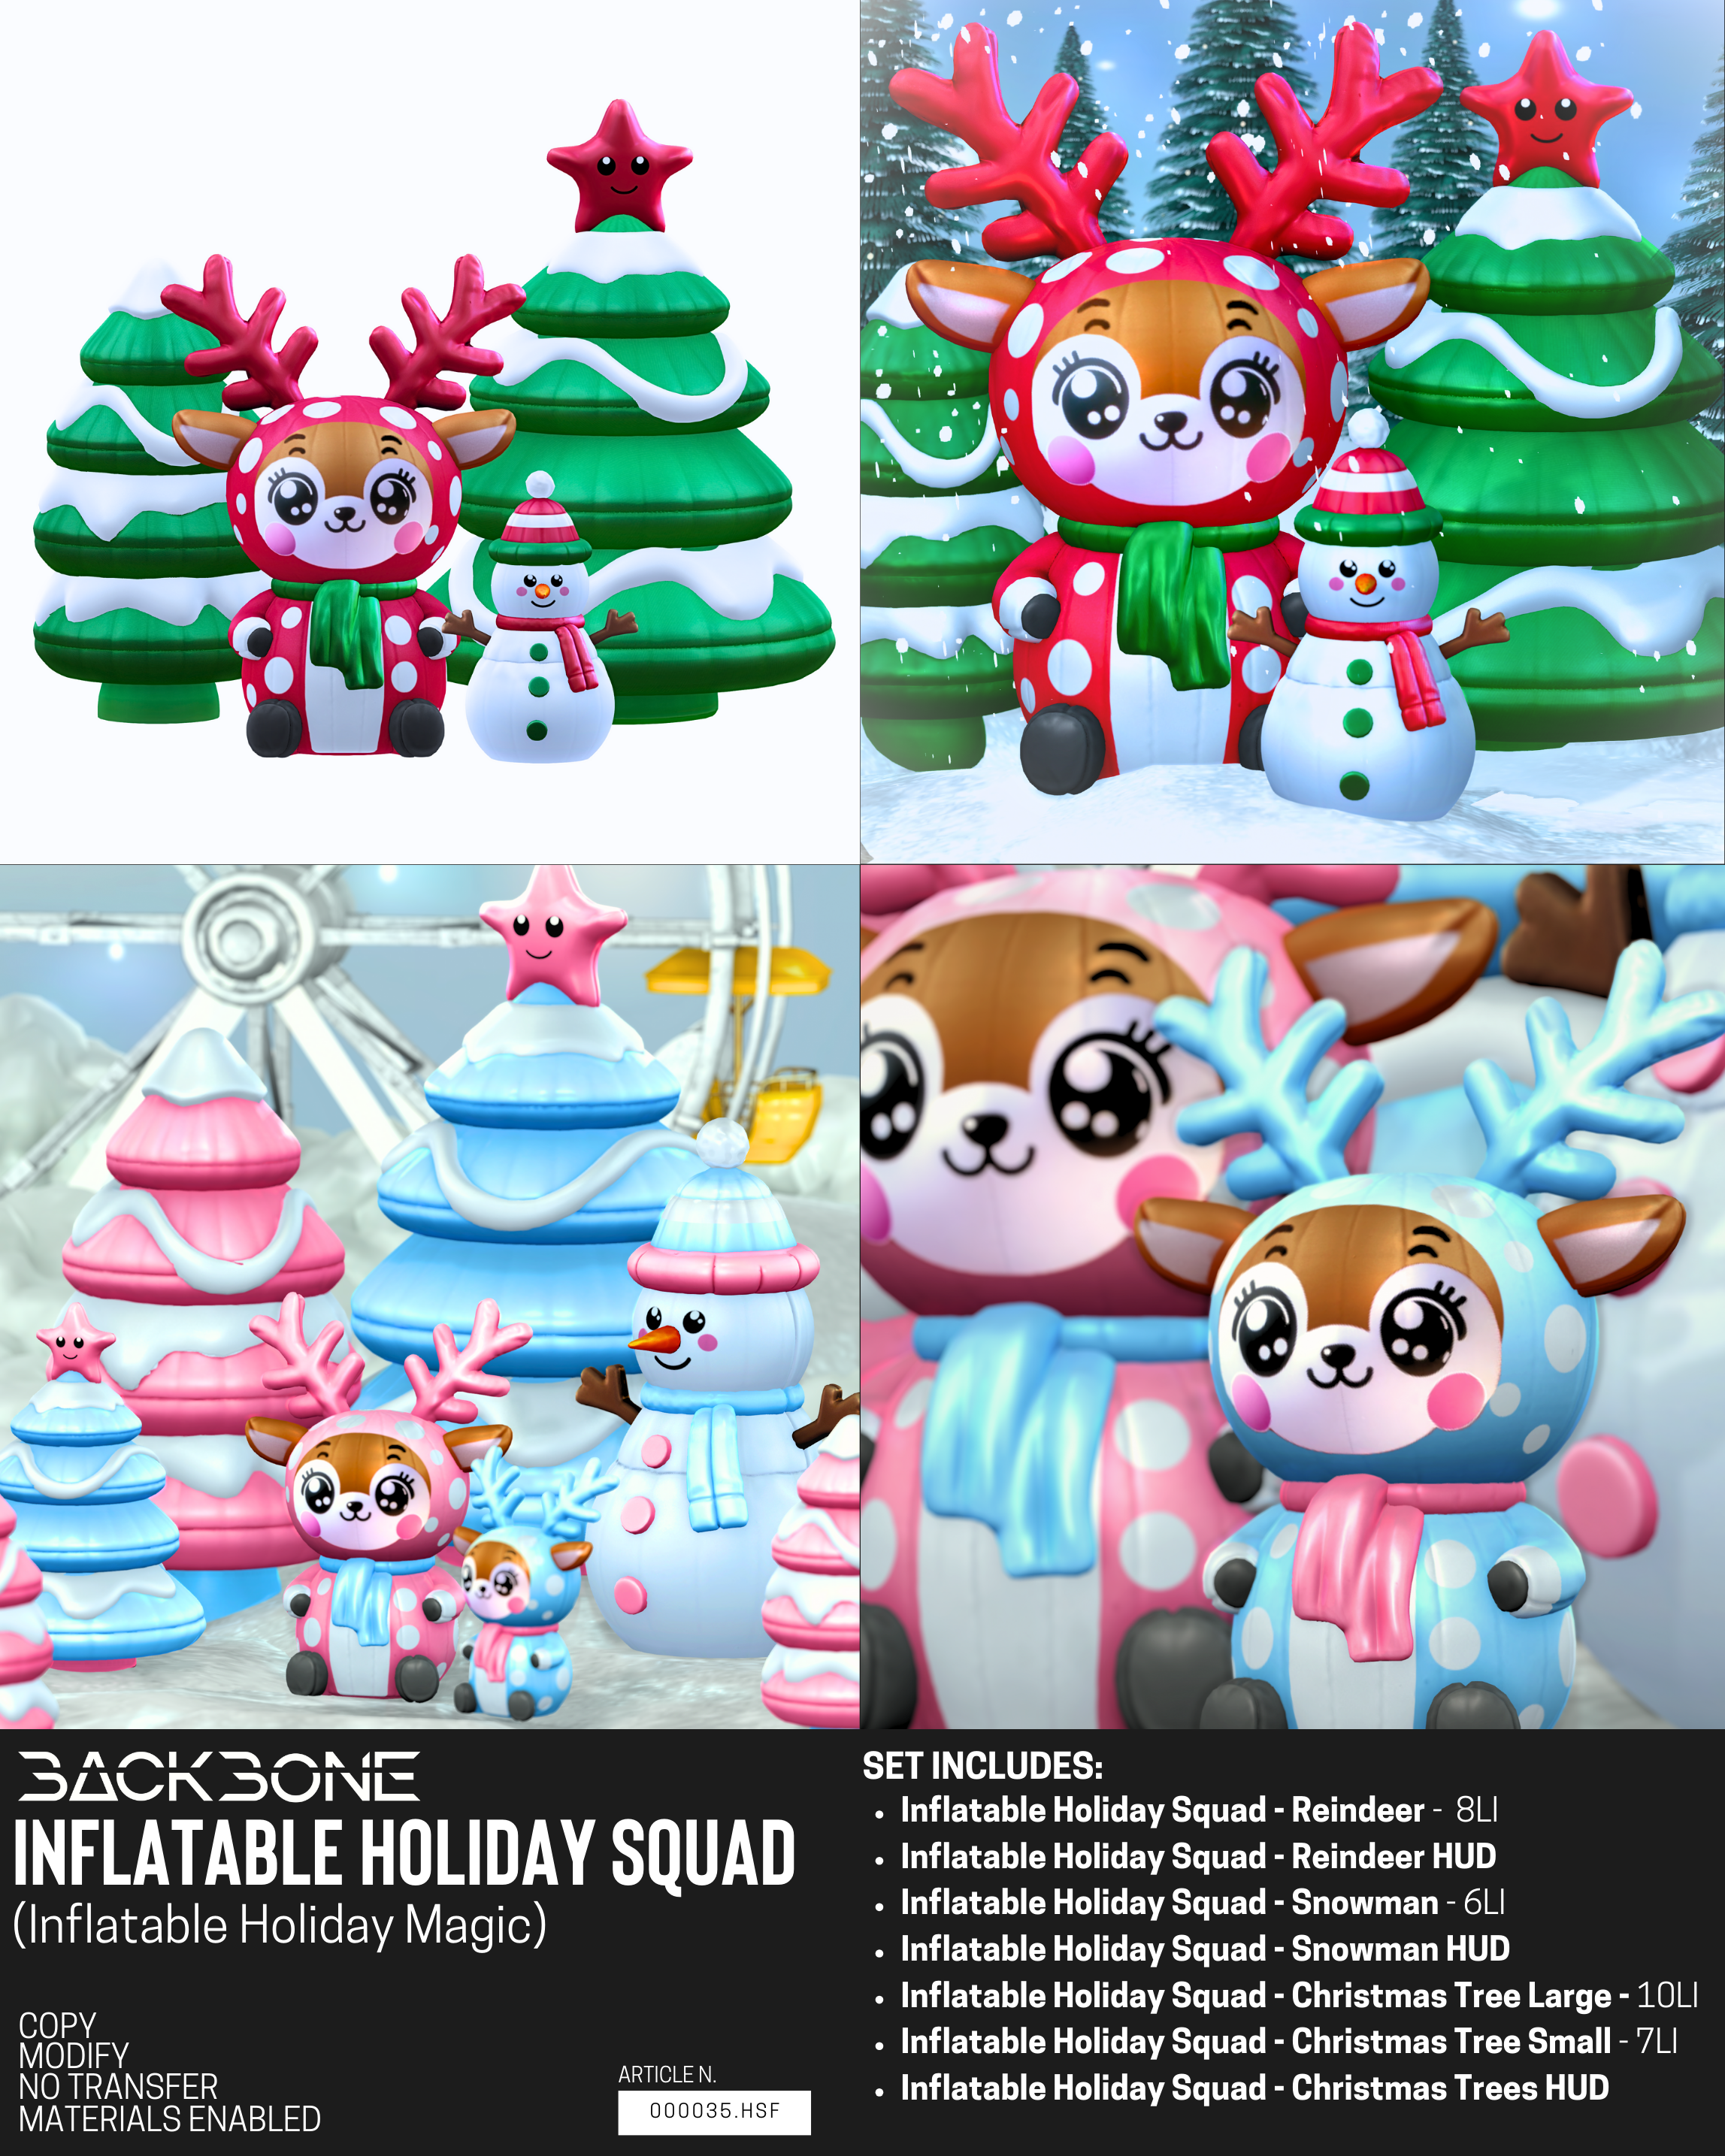 Backbone – Inflatable Holiday Squad